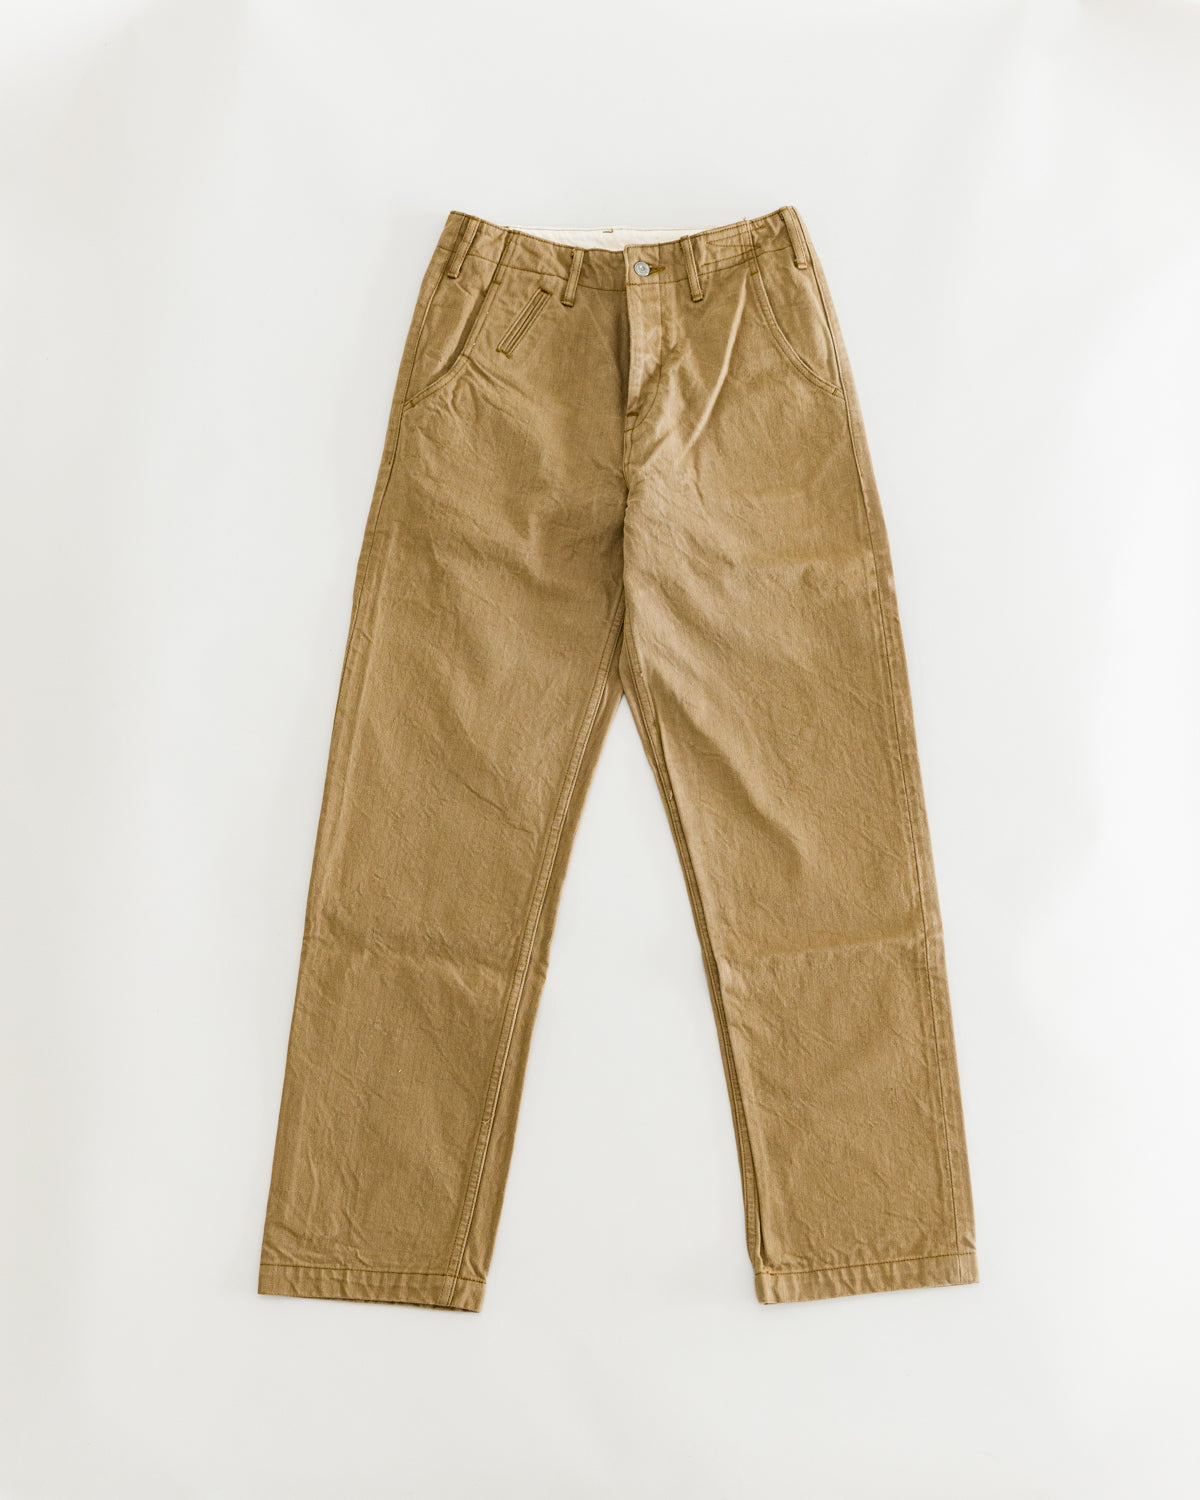 SJ48CP - 15oz Heavy Chino Pants Khaki - Regular Straight Fit